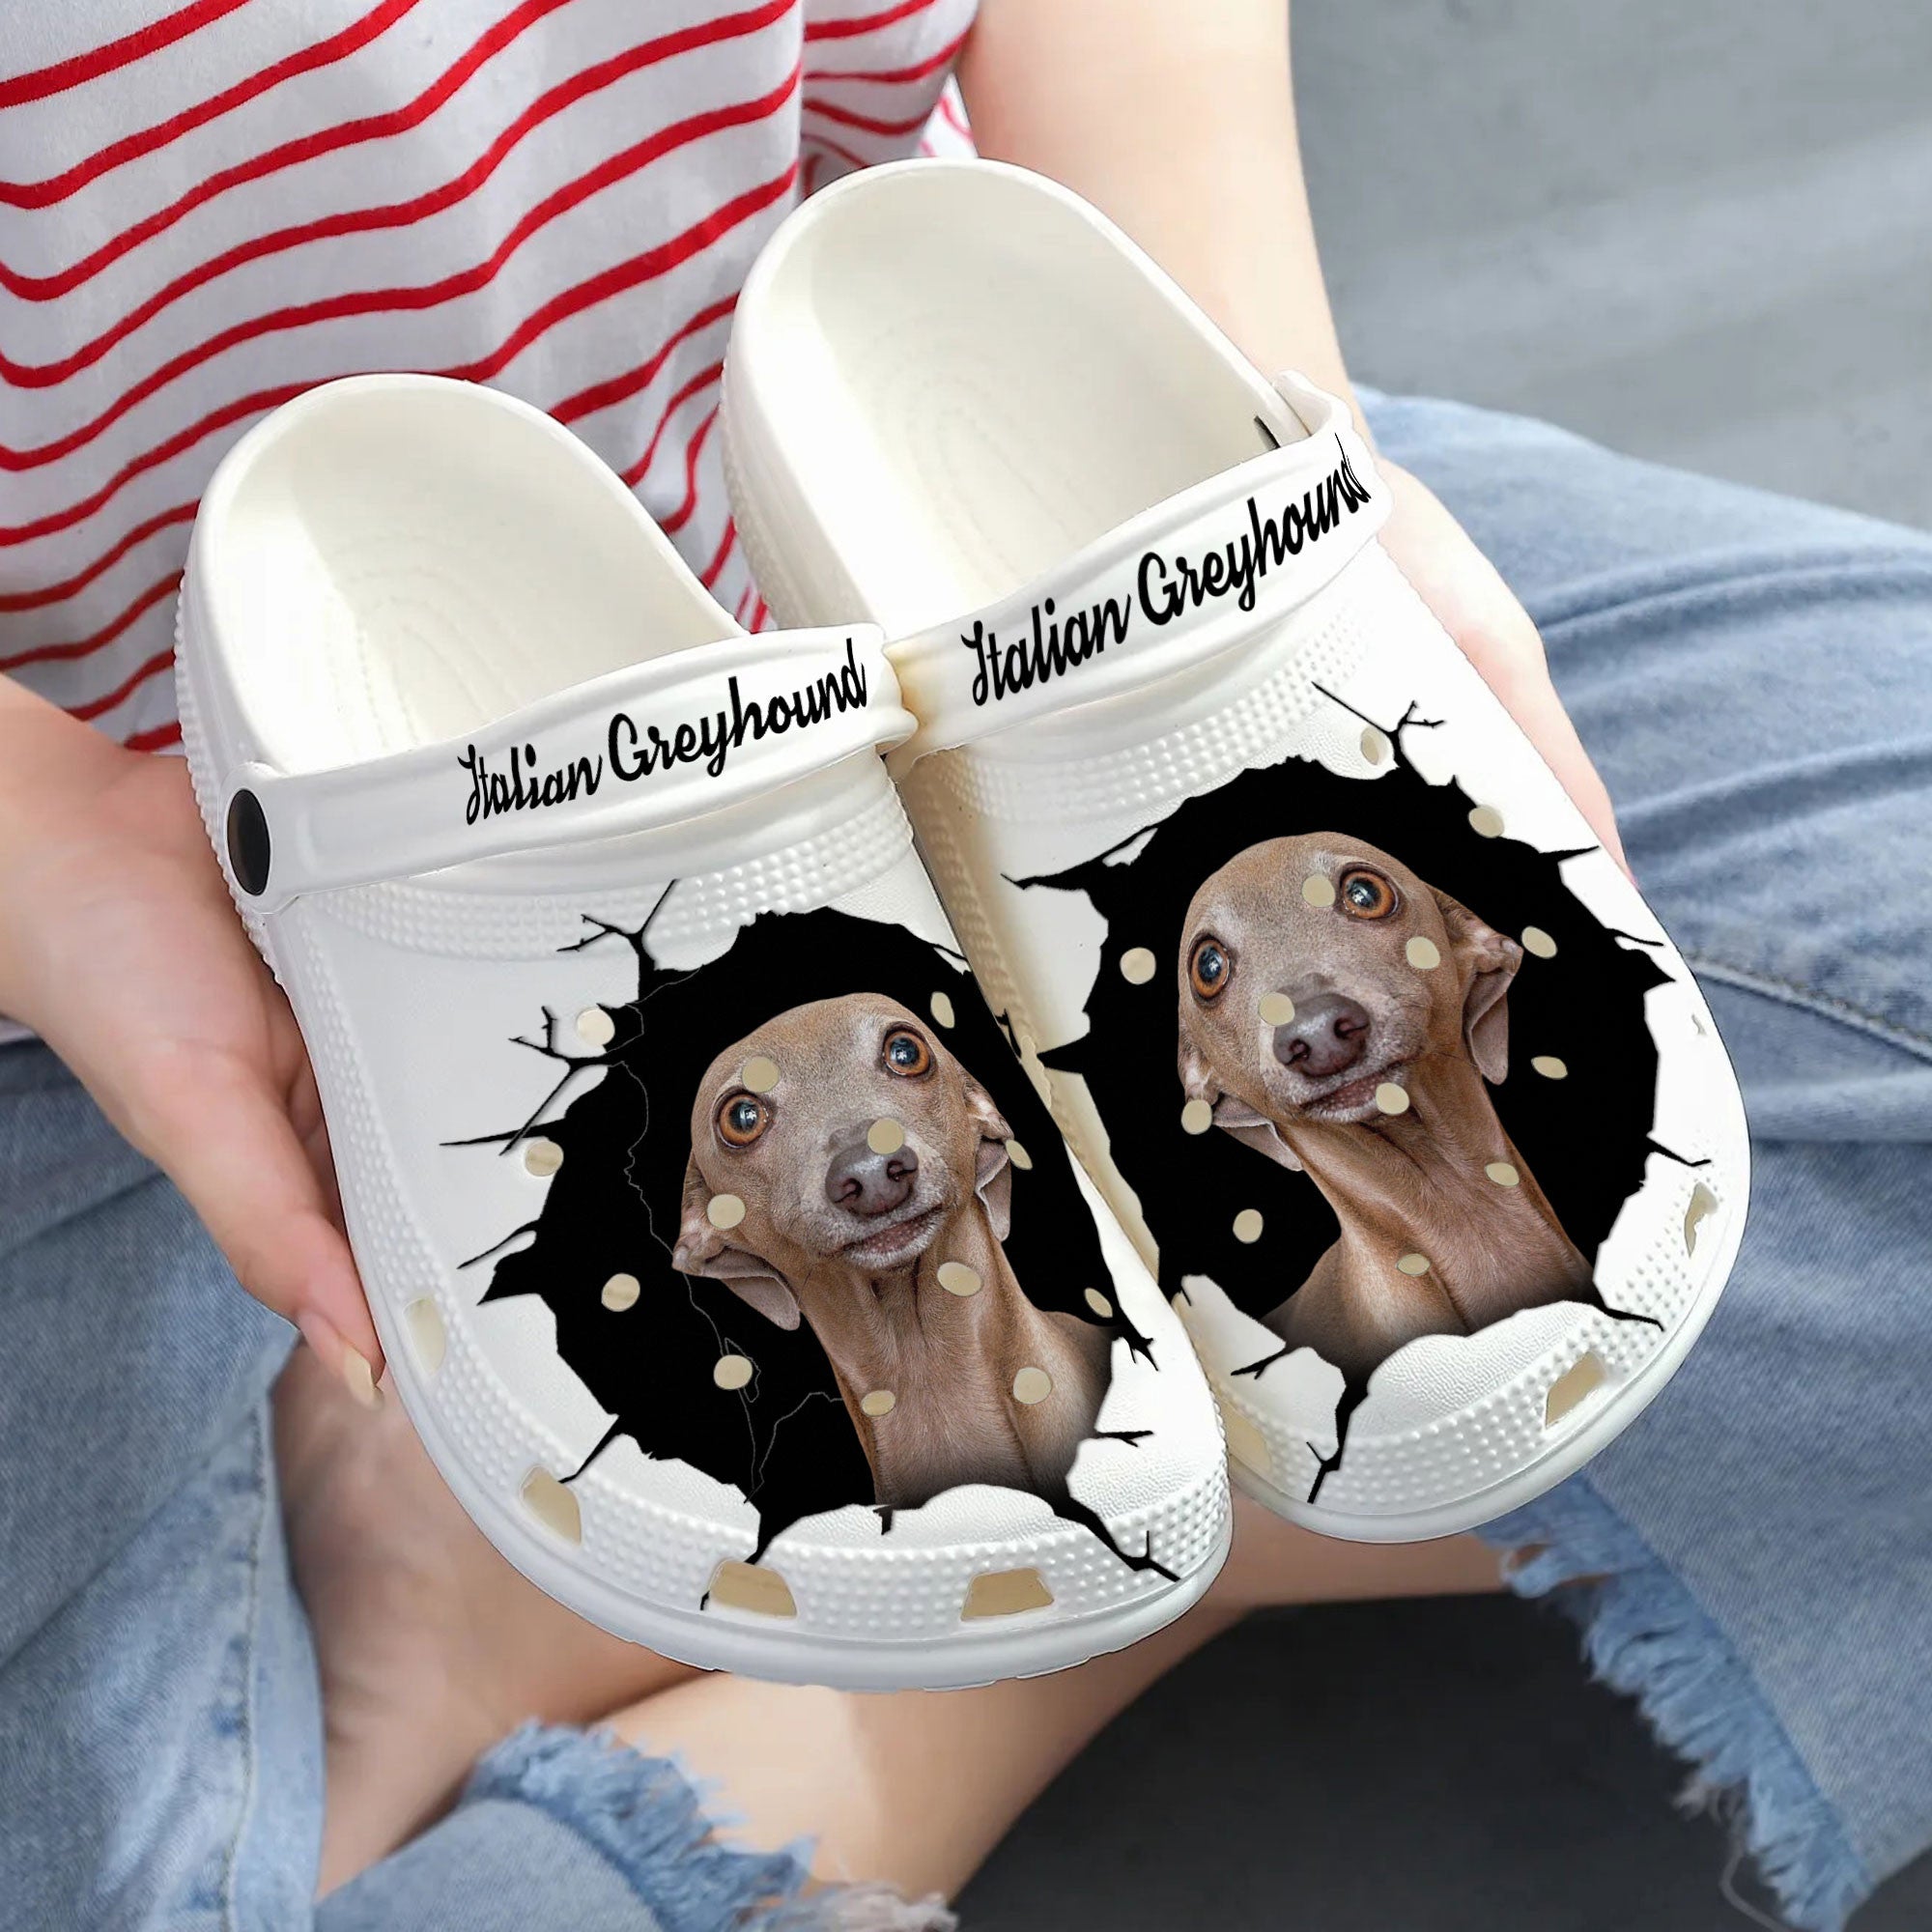 Italian Greyhound - 3D Graphic Custom Name Crocs Shoes